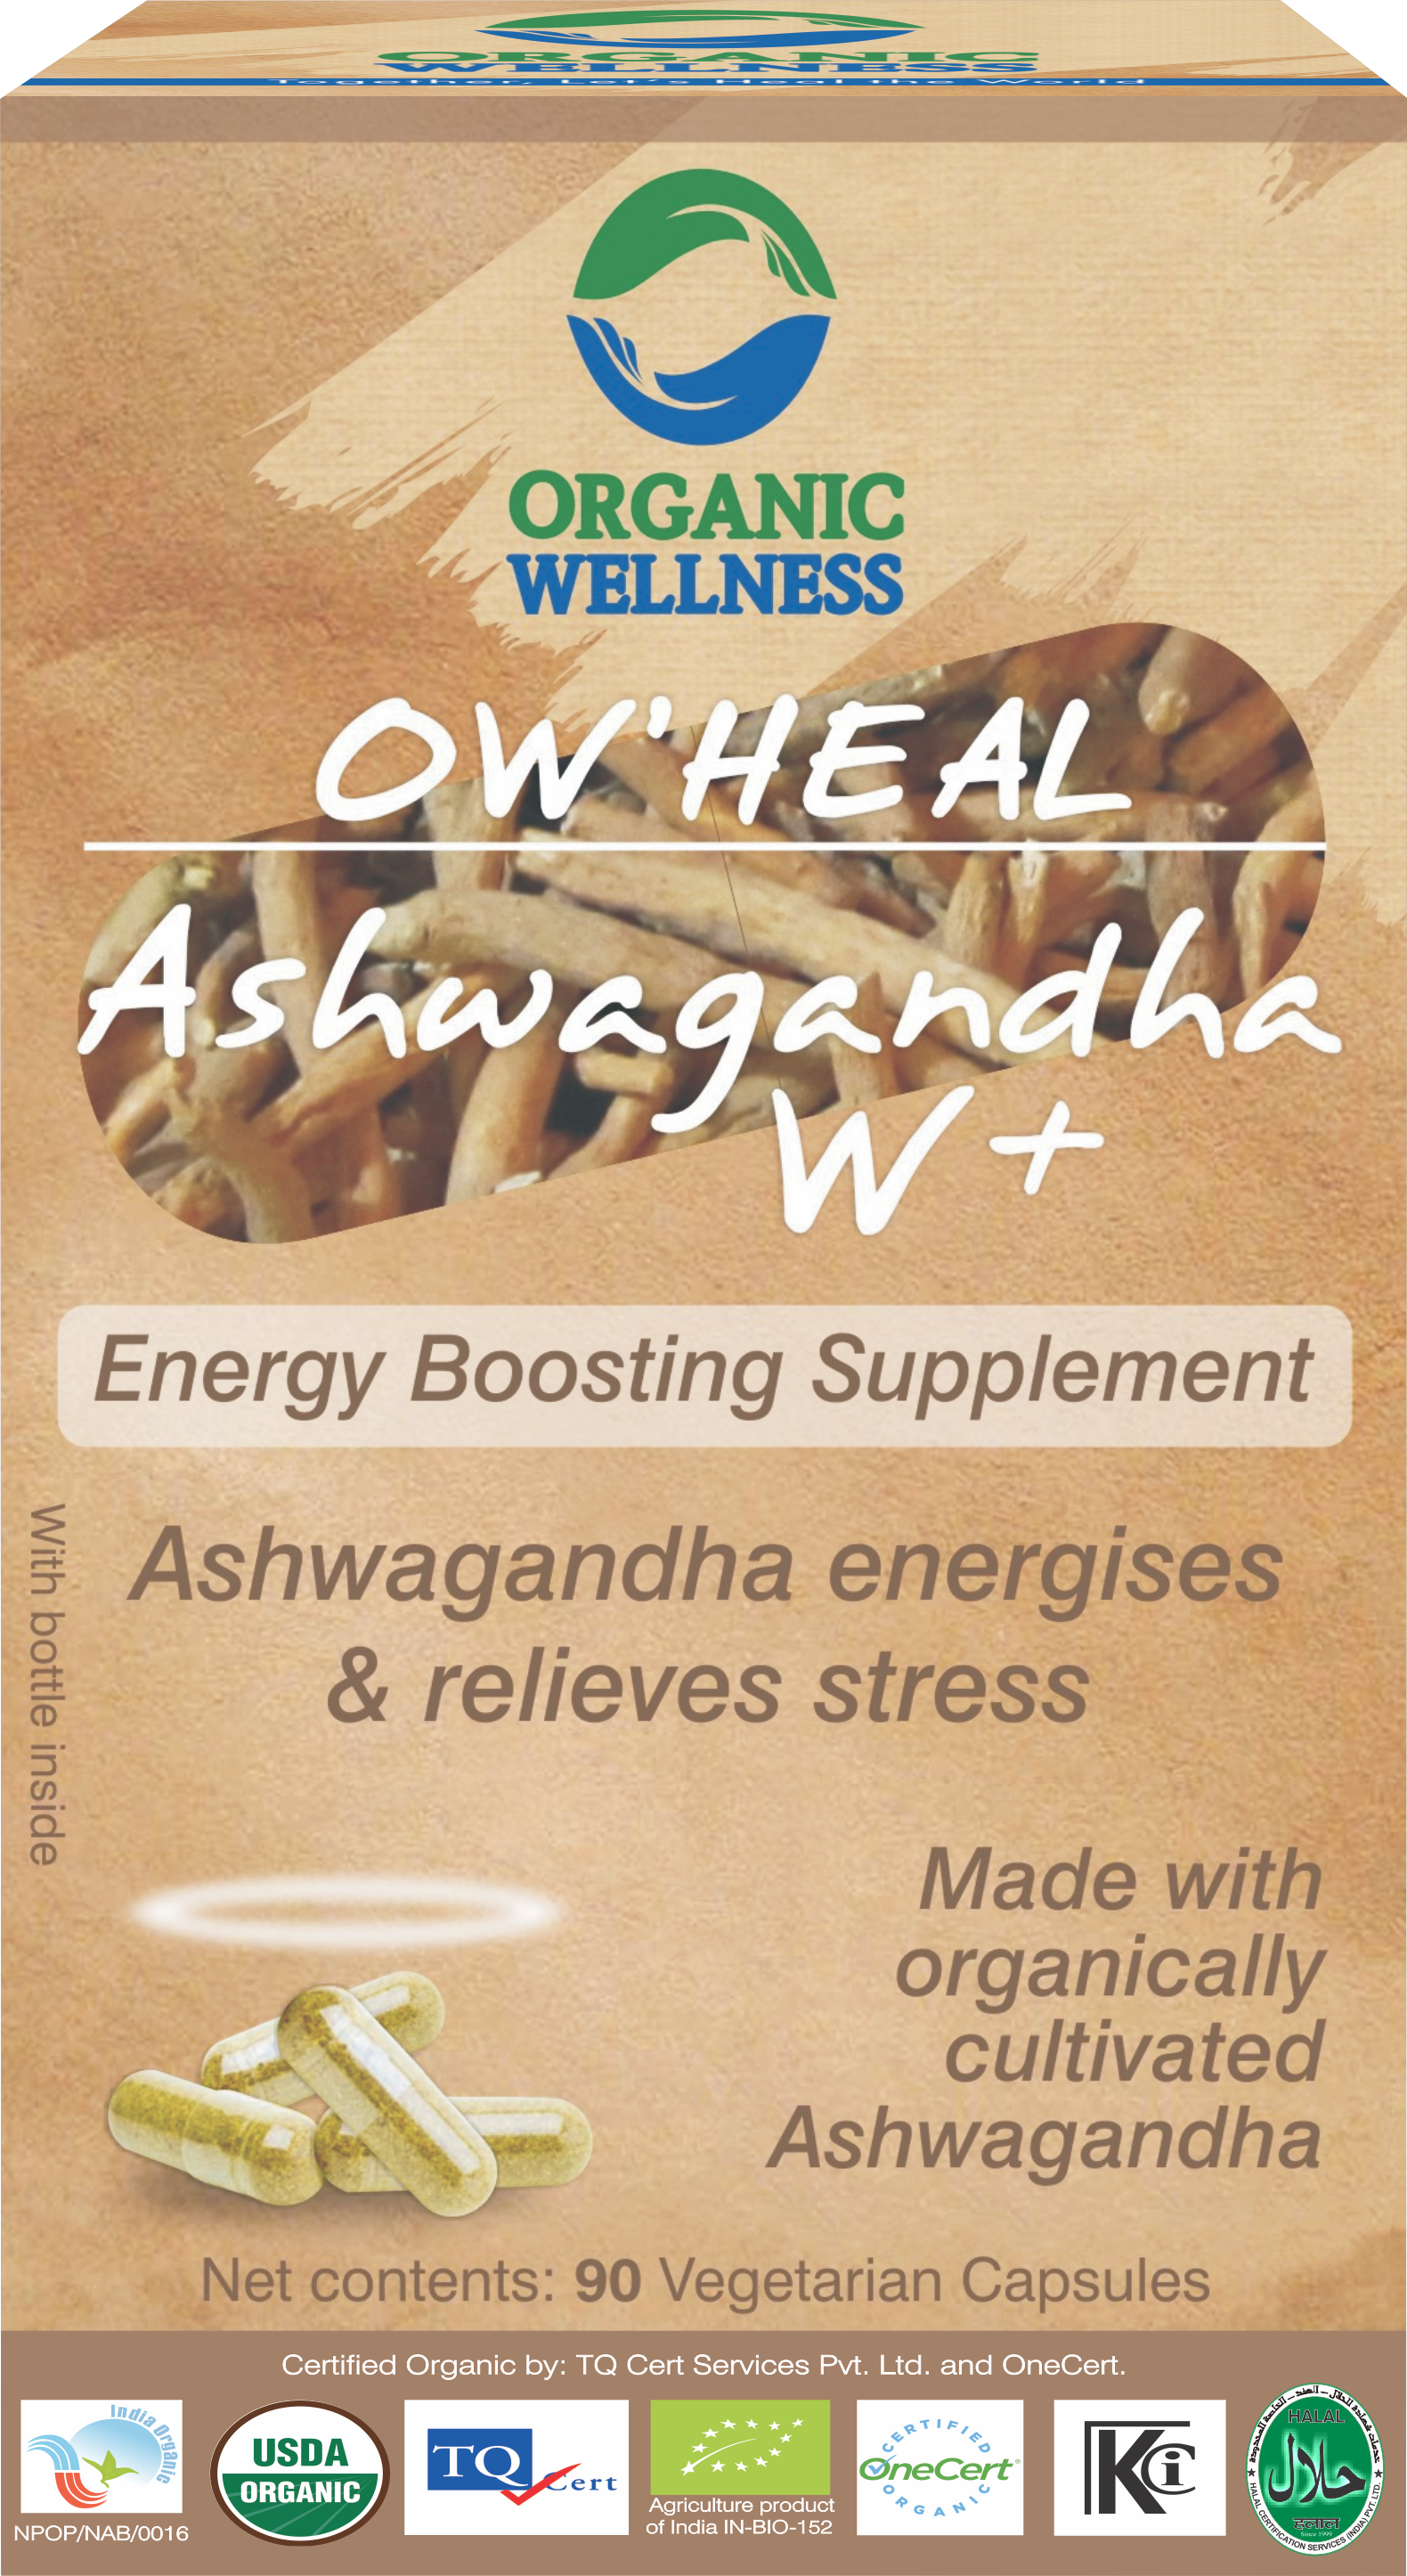 Buy Organic Wellness Heal Ashwagandha W Plus Capsule at Best Price Online